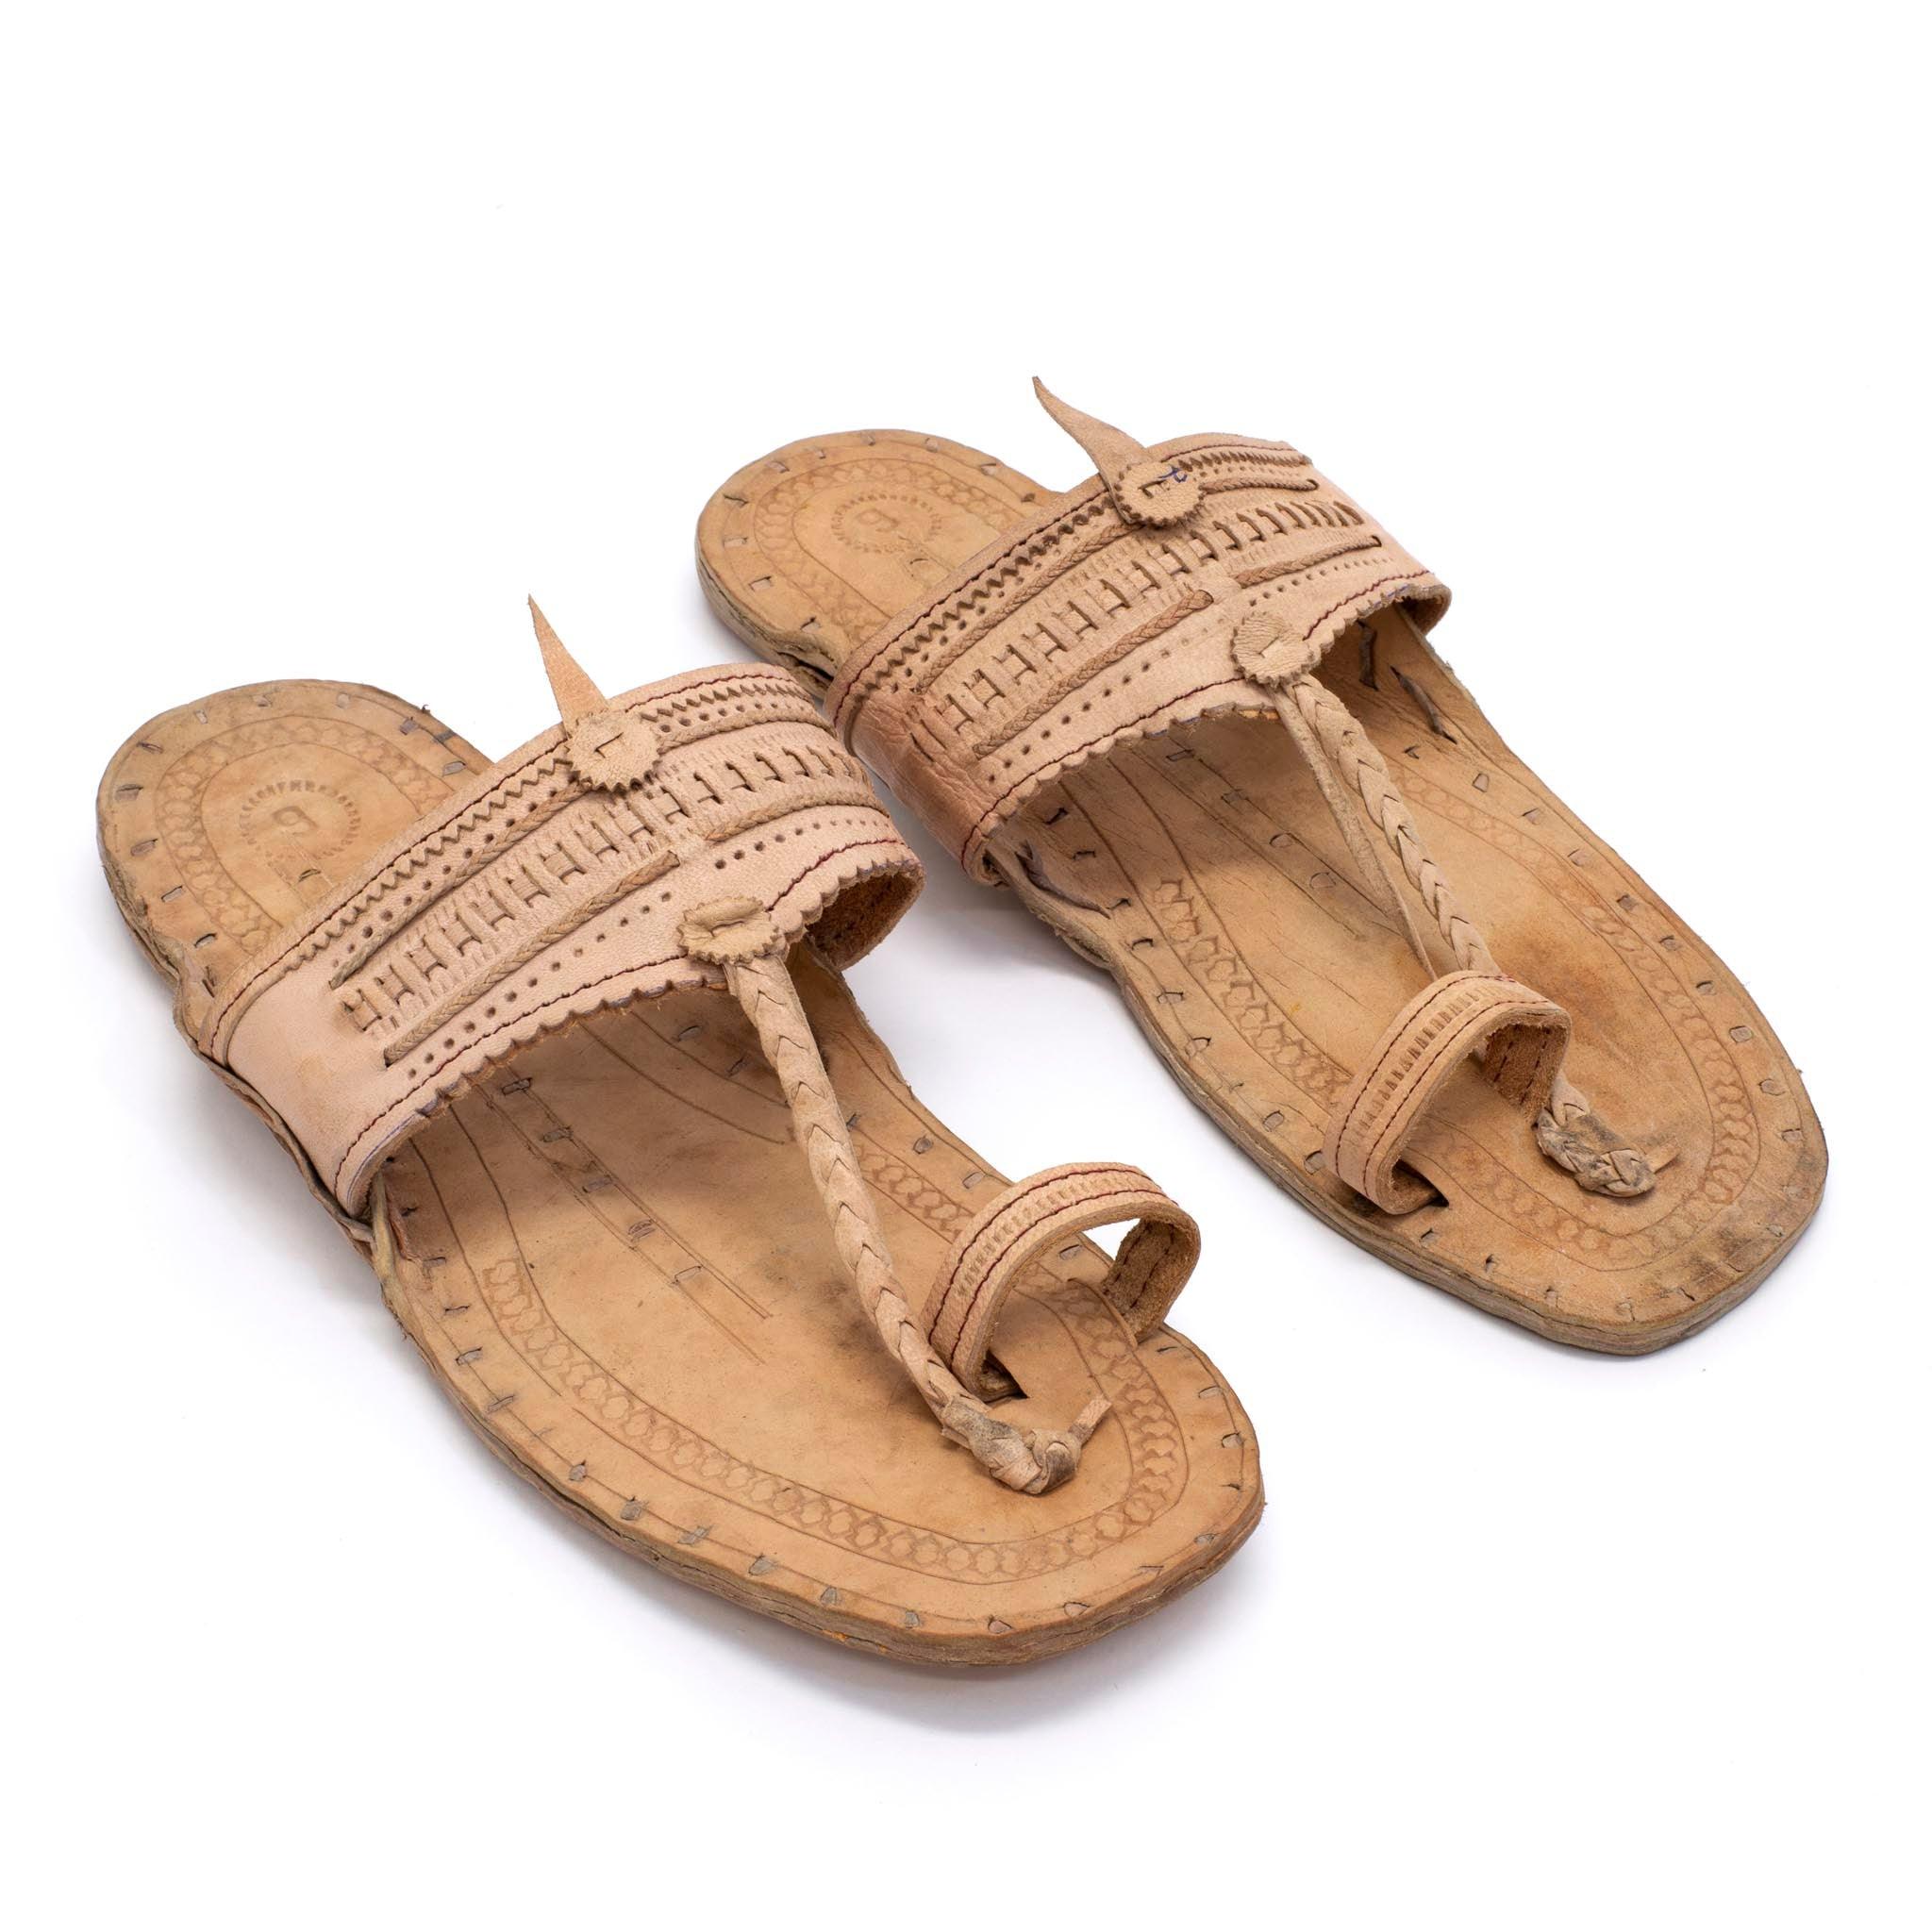 water buffalo sandals wholesale